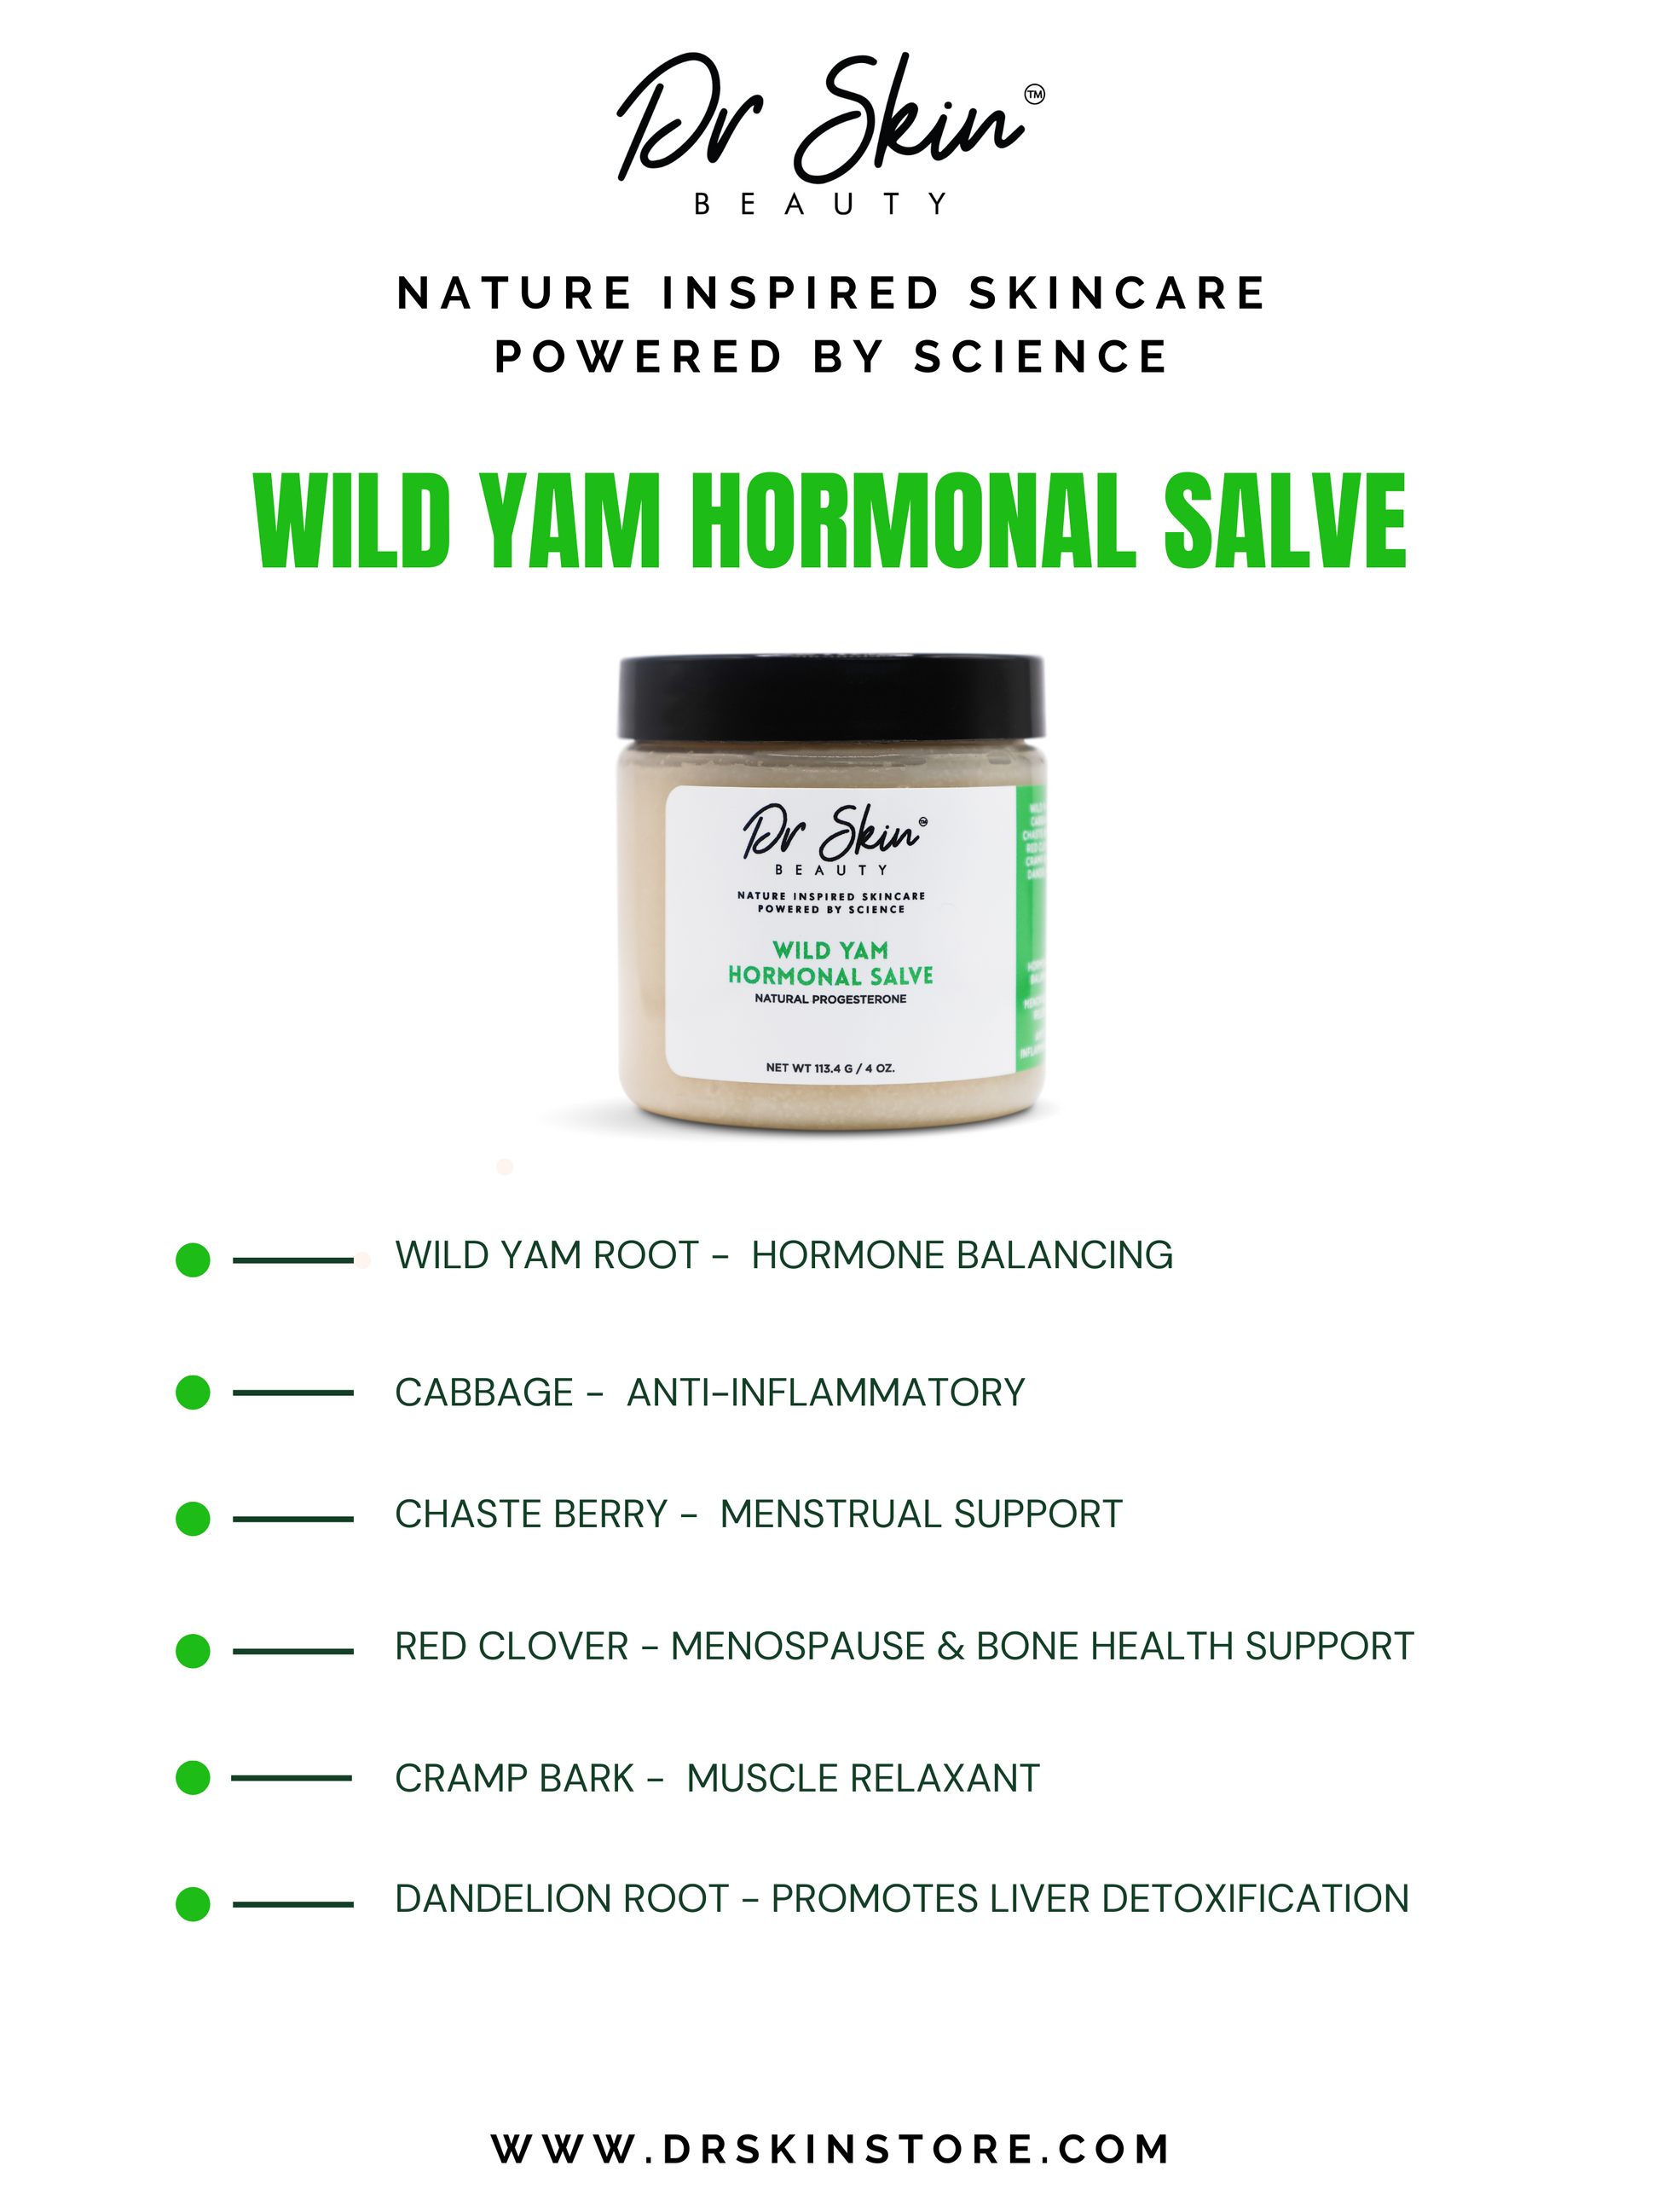 Wild Yam Hormonal Salve